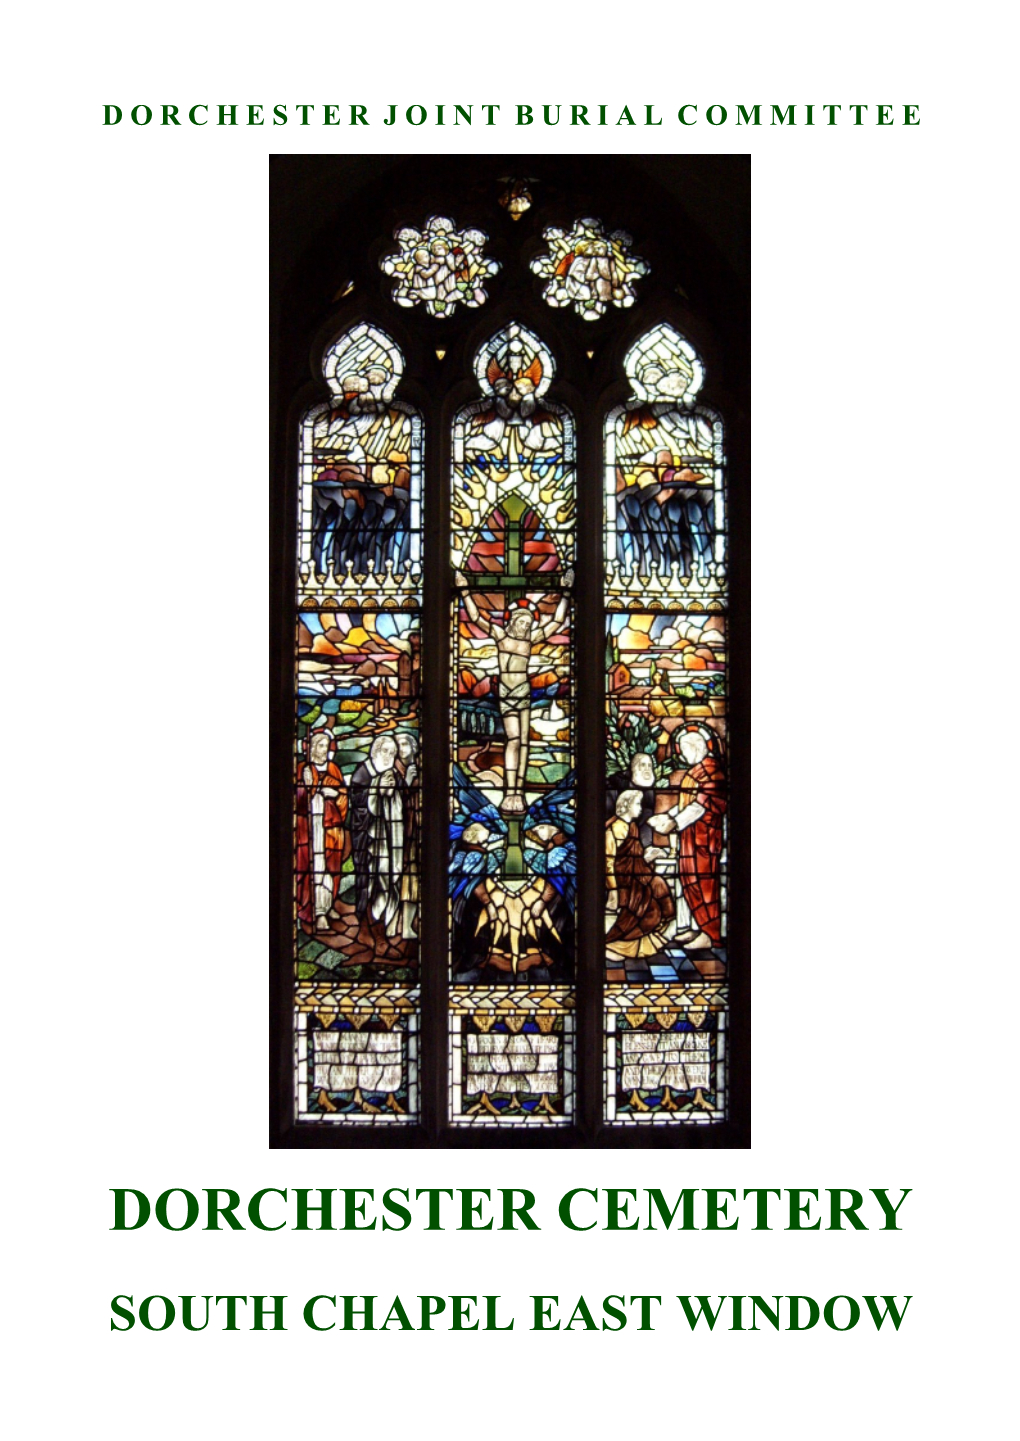 Dorchester Cemetery South Chapel East Window Leaflet